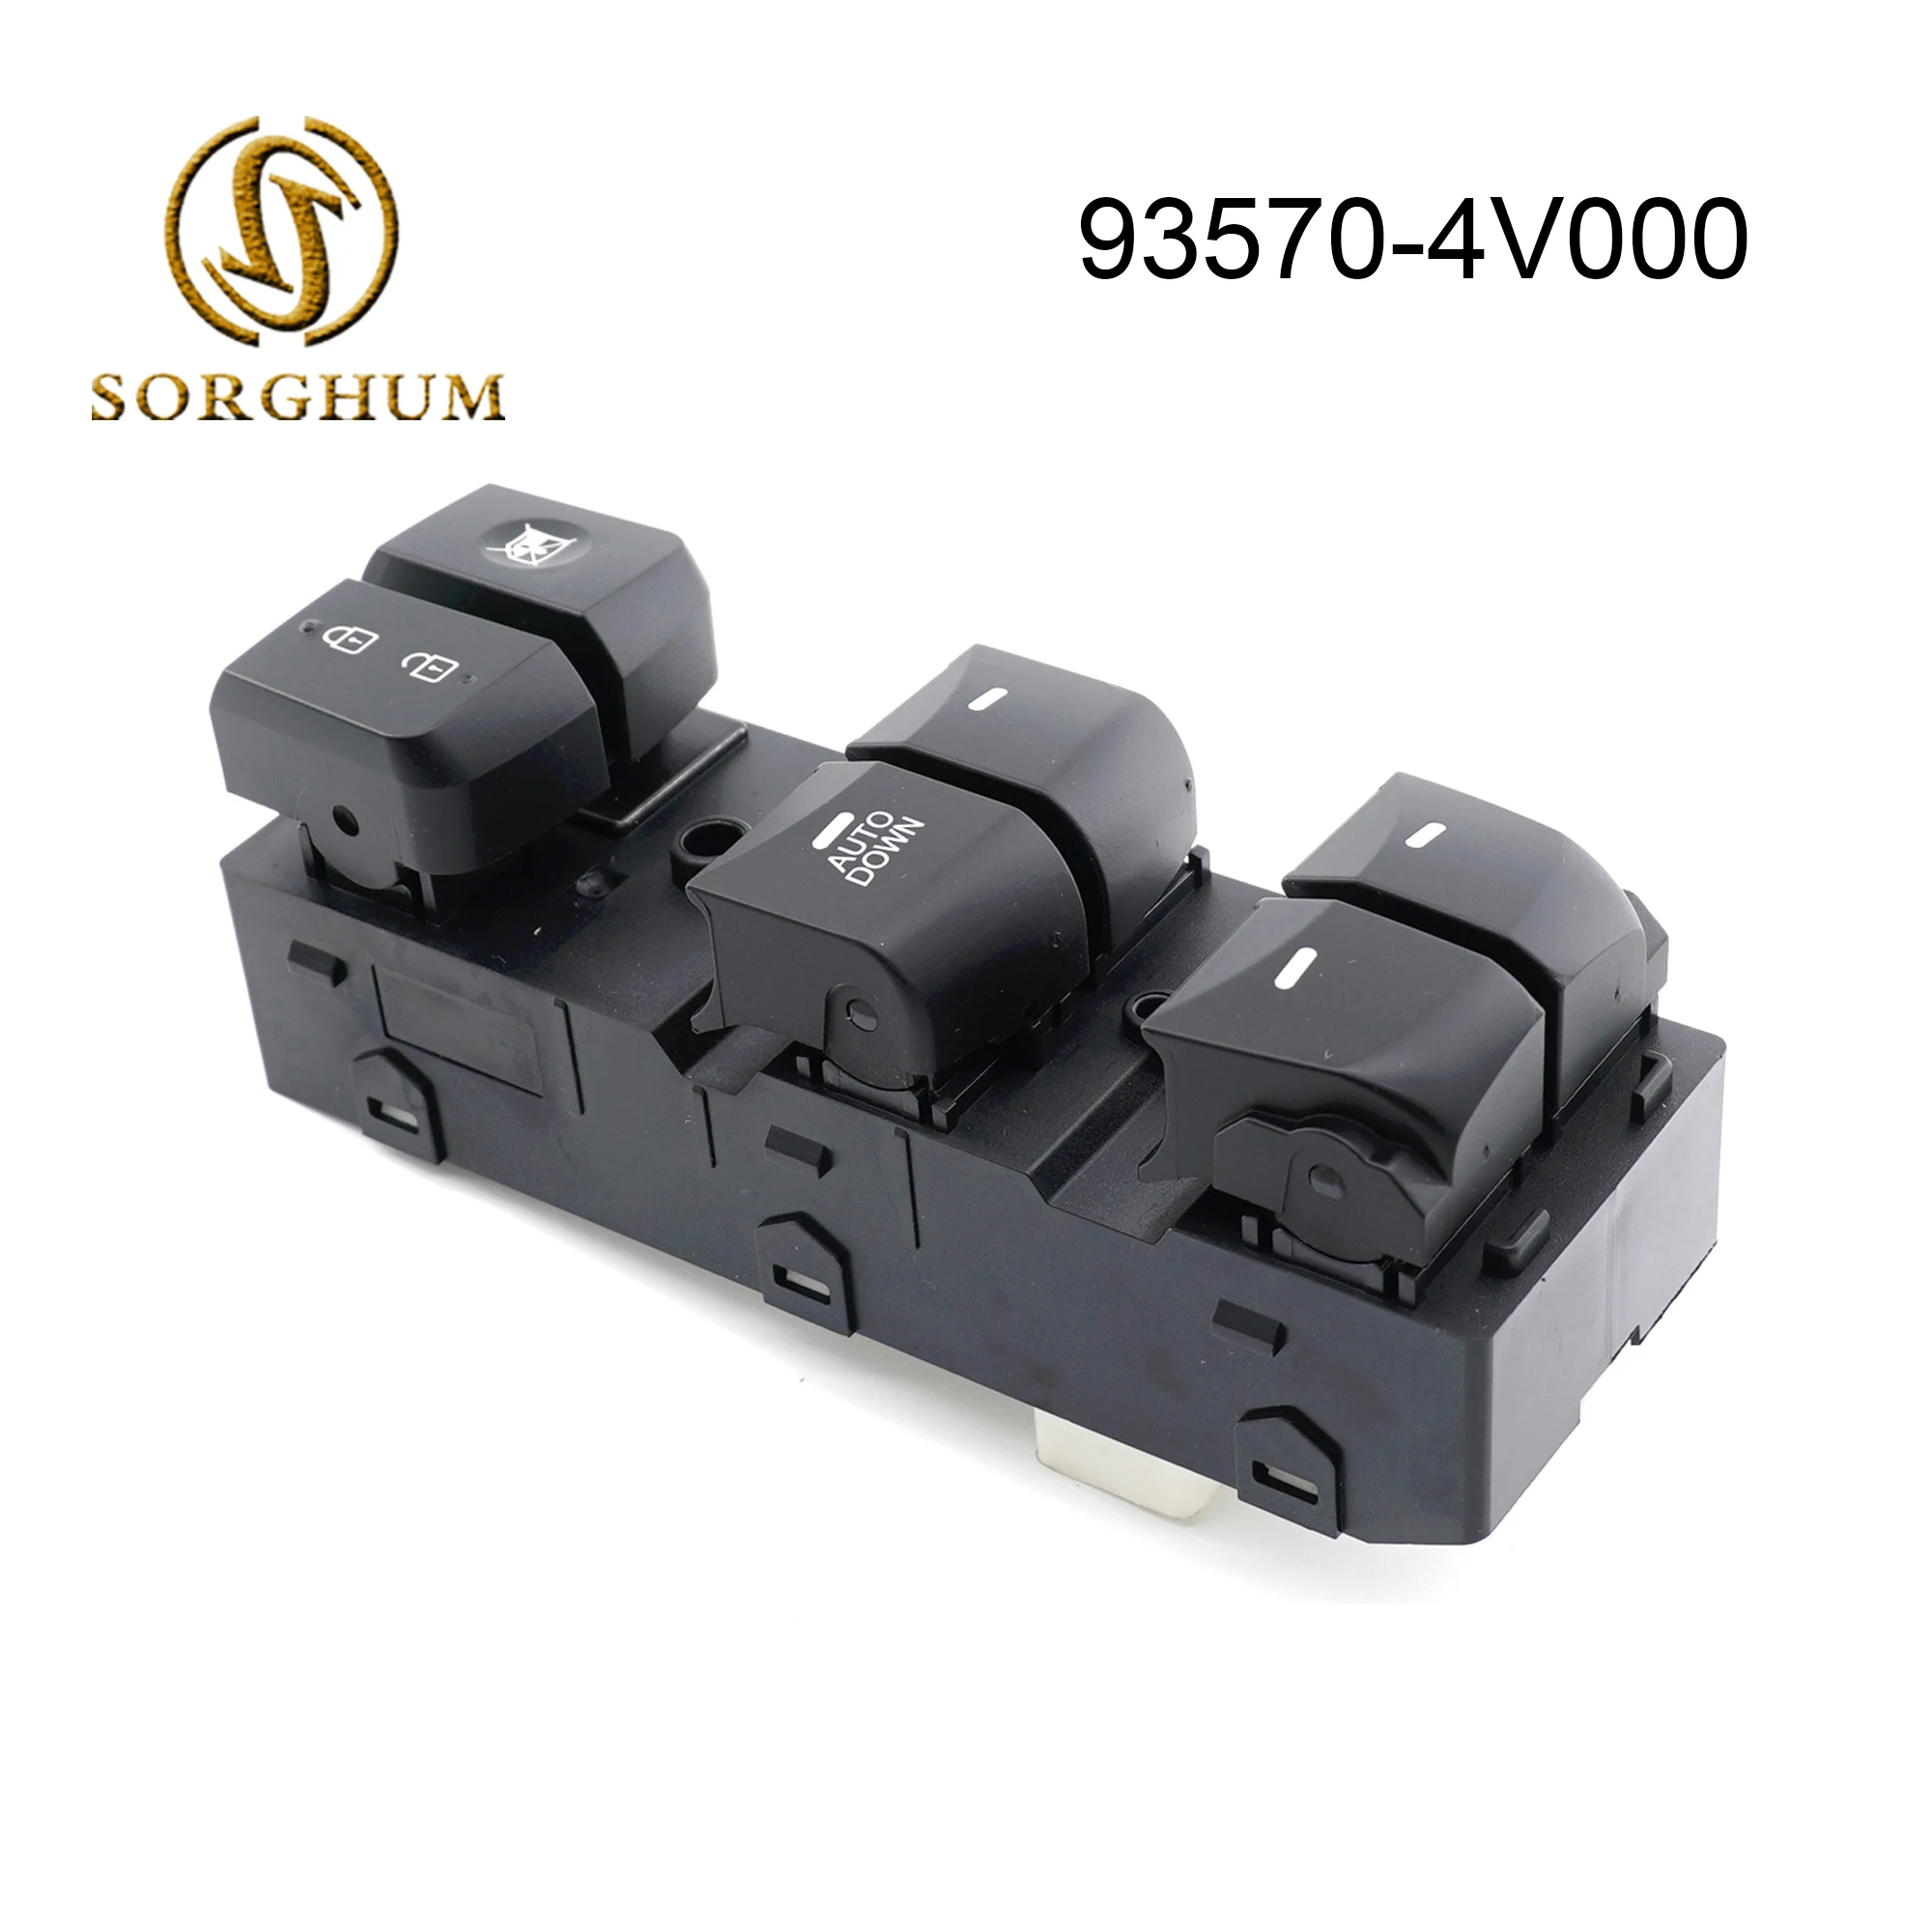 

Sorghum Black Electric Power Window Master Control Switch For Hyundai Elantra Lang Move 2012-2016 93570-4V000 93570-3X032RY